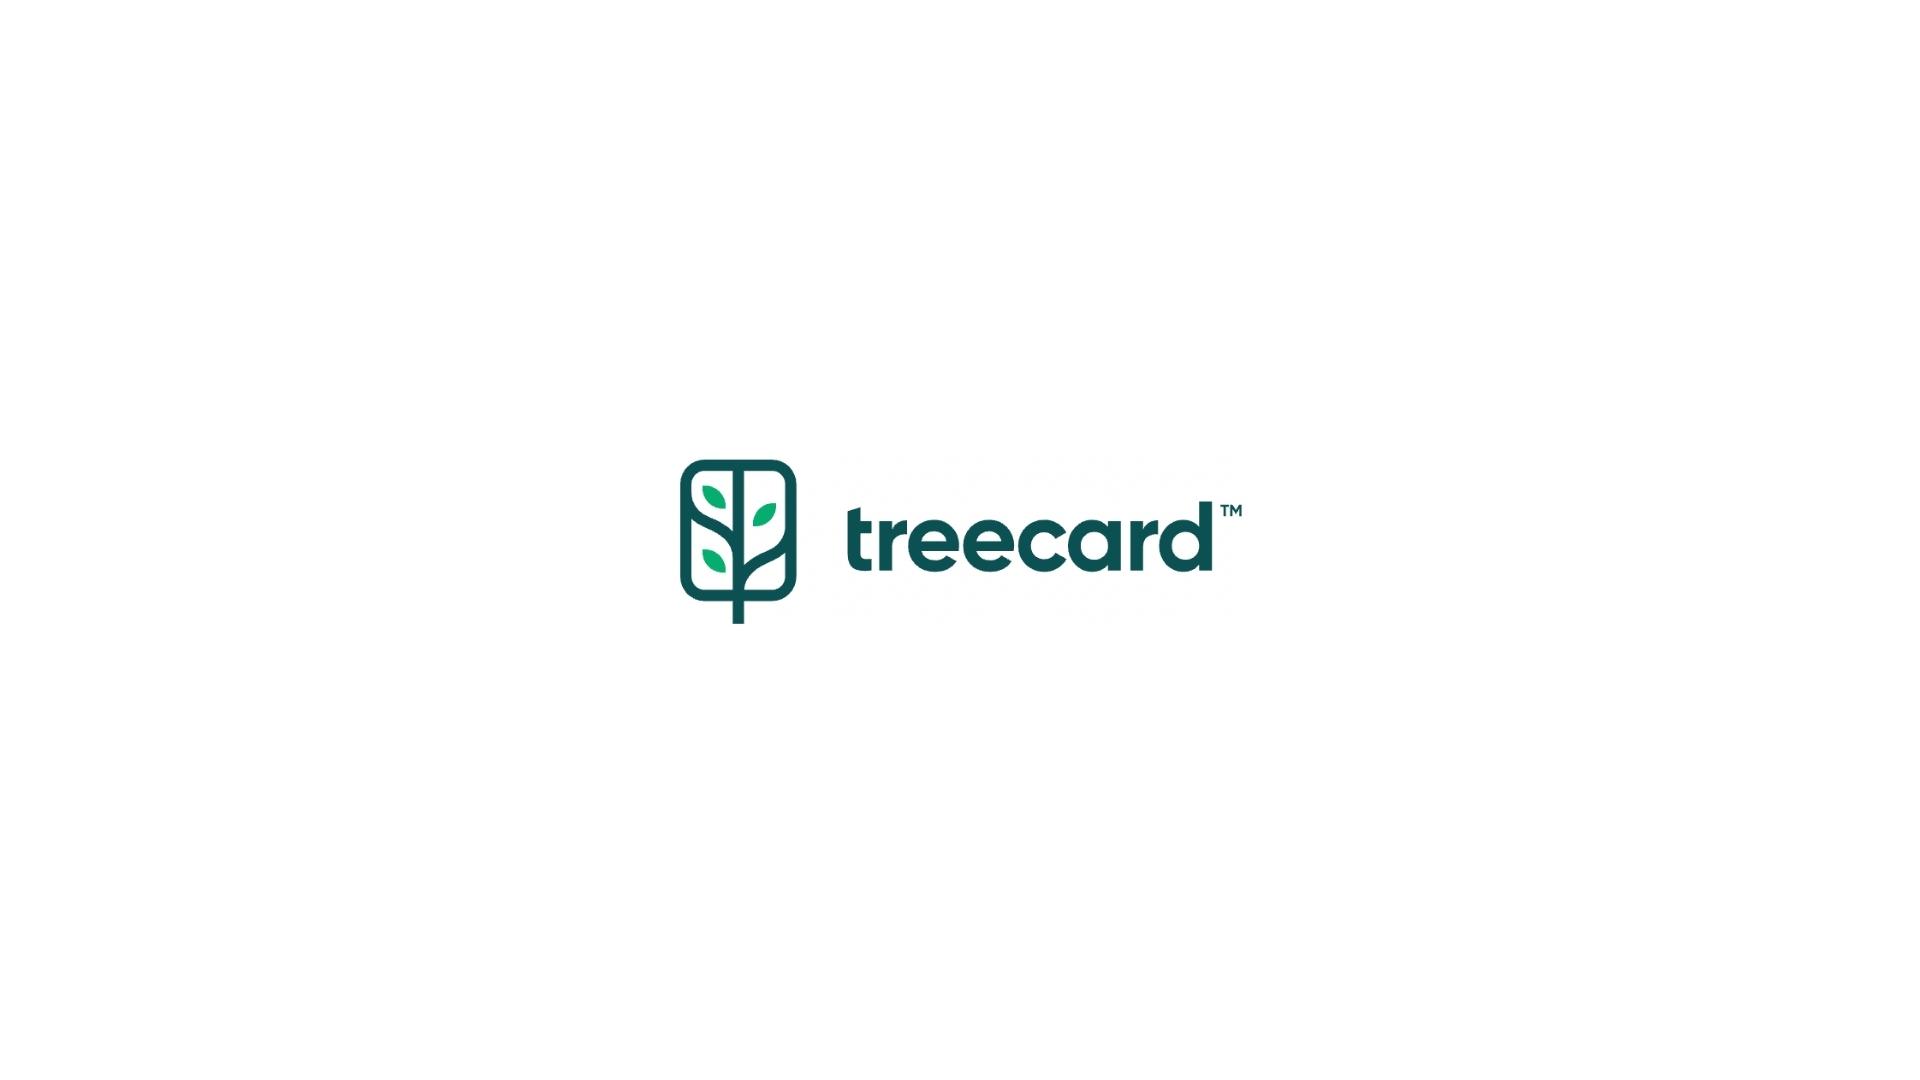 Treecard